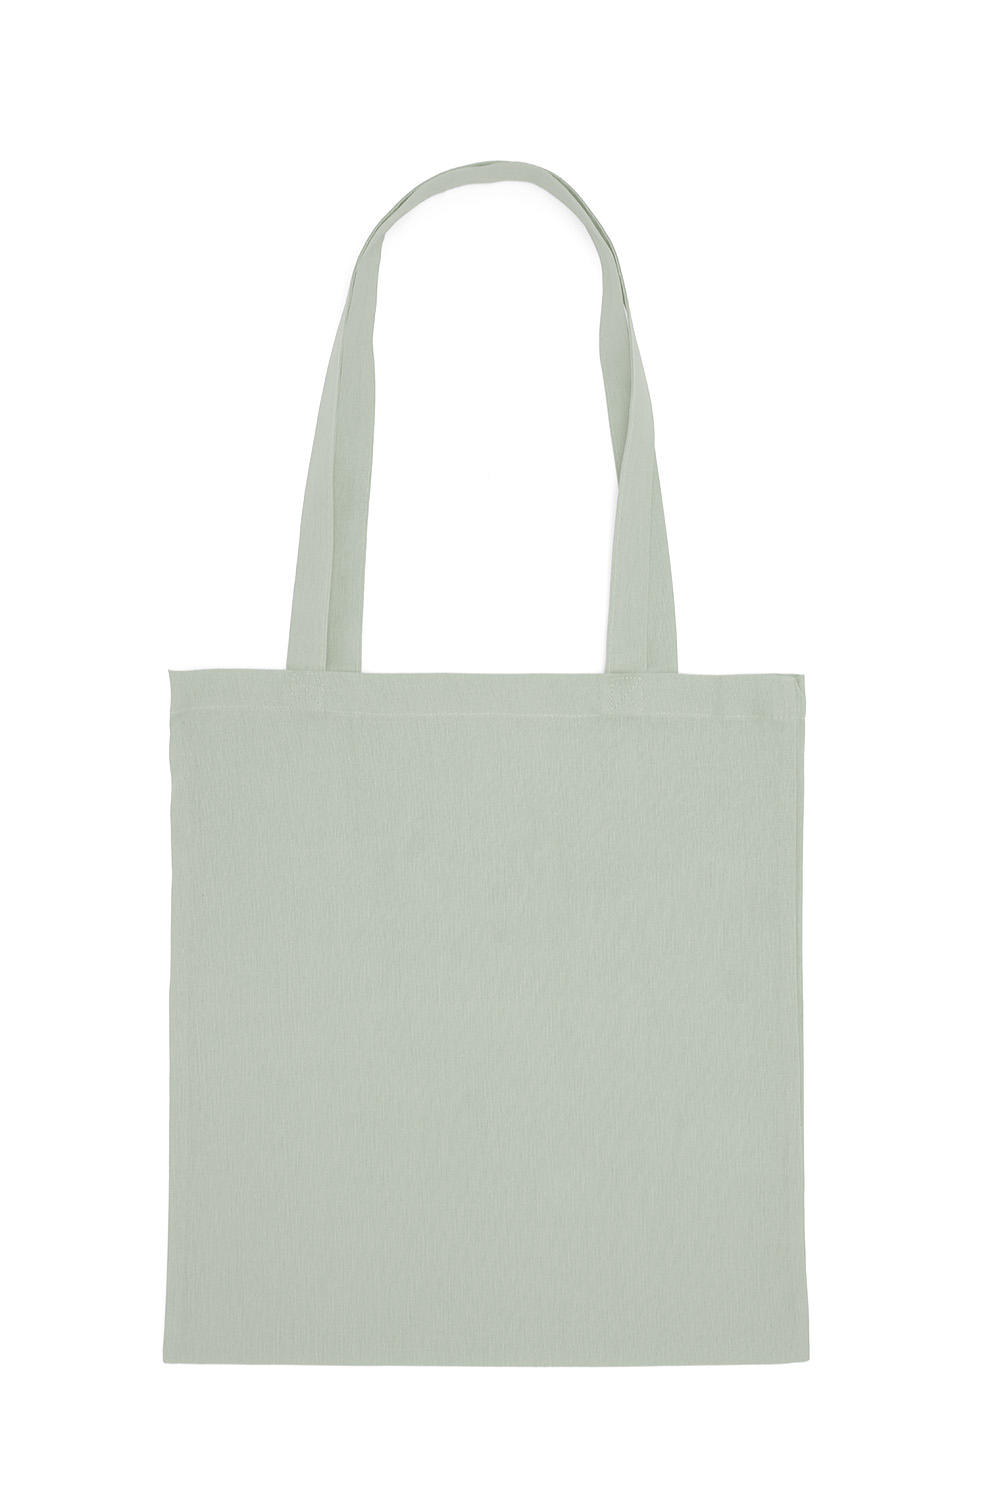  Cotton Bag LH in Farbe Mercury Grey